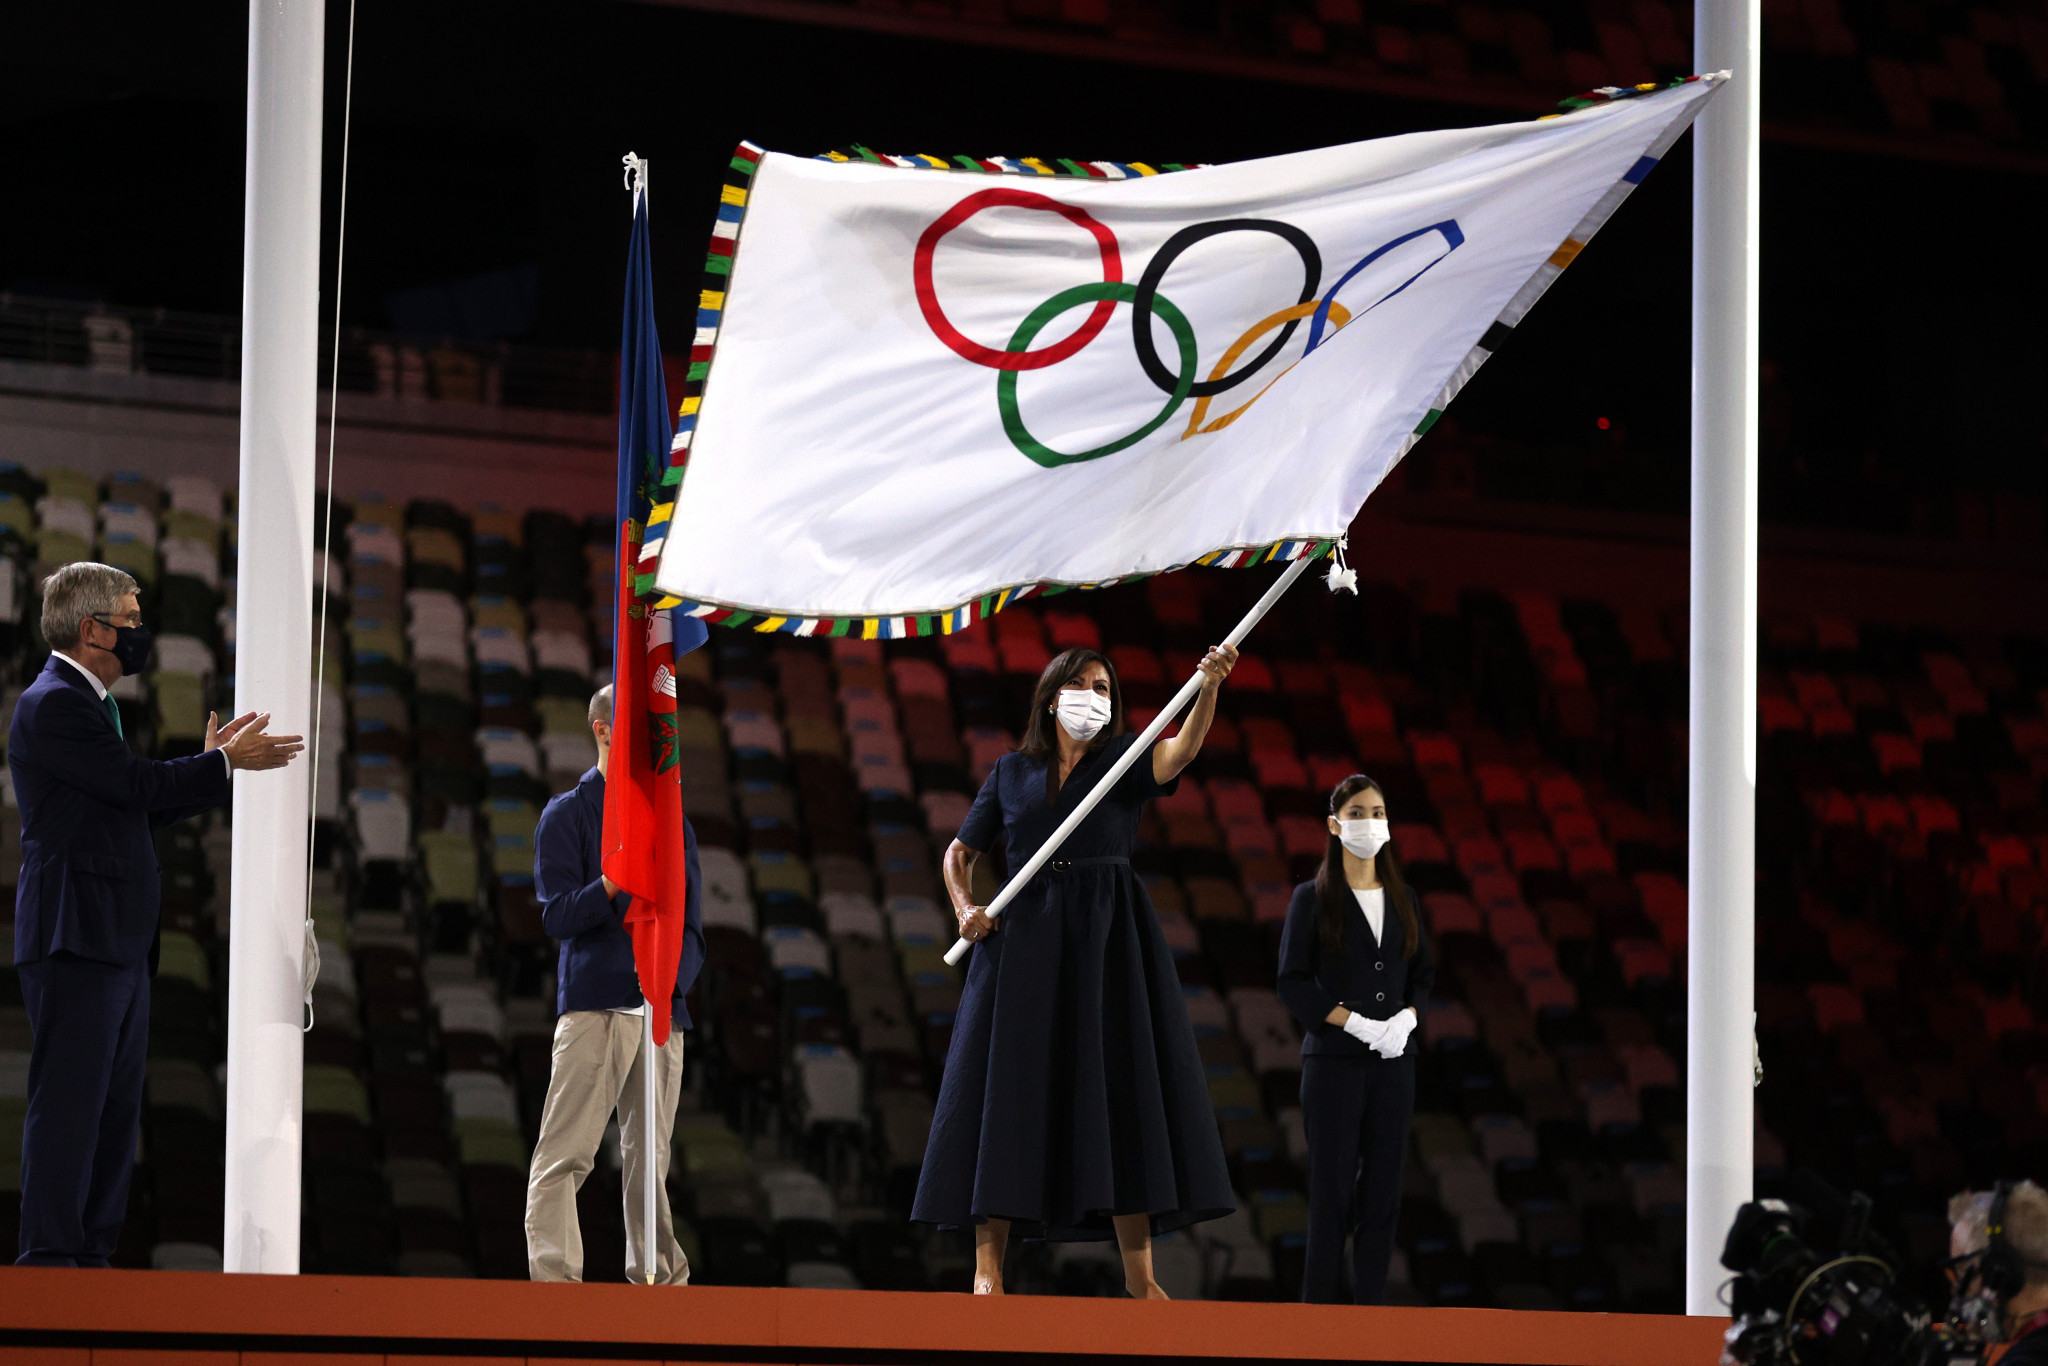 Paris Mayor Hidalgo refuses to set crowd limit for 2024 Olympics Opening Ceremony